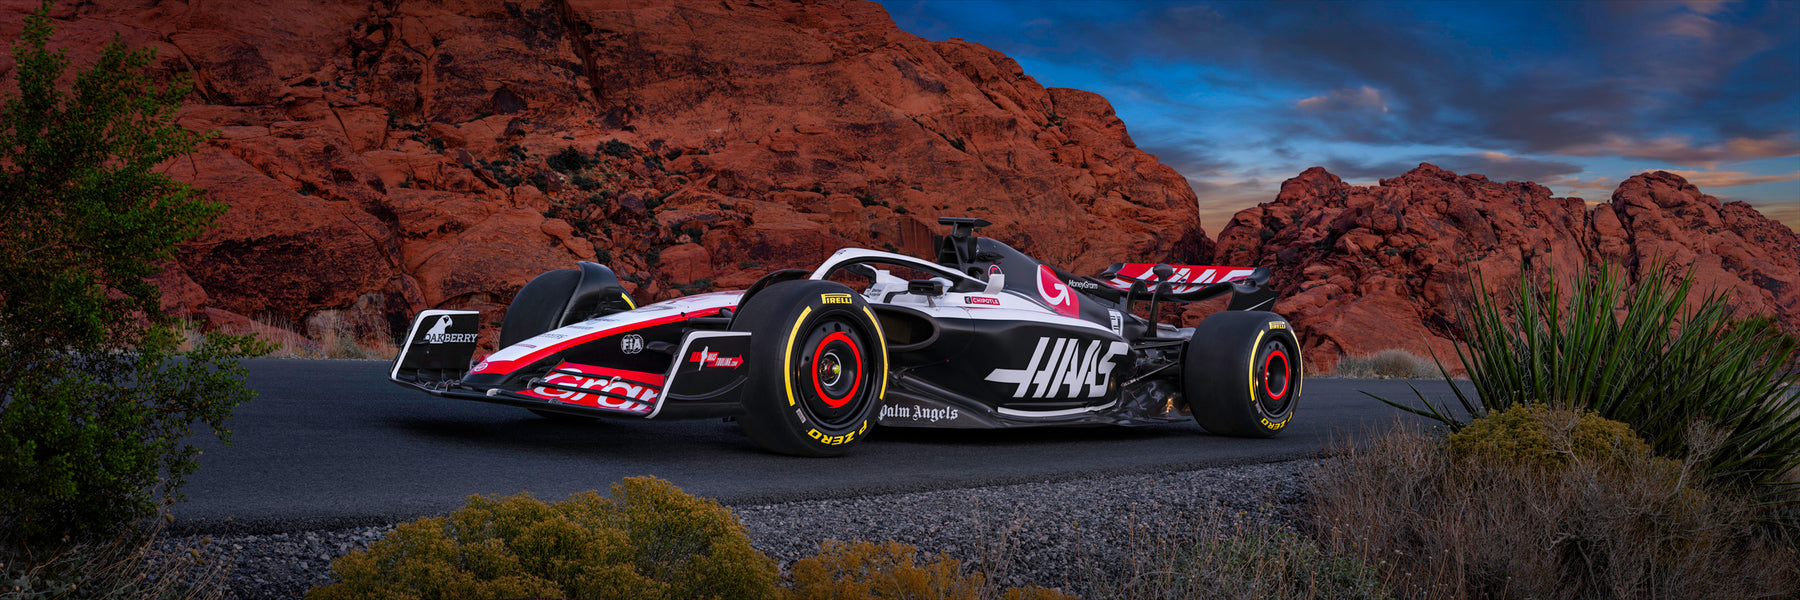 Canyon Racer: Haas Racing Collection